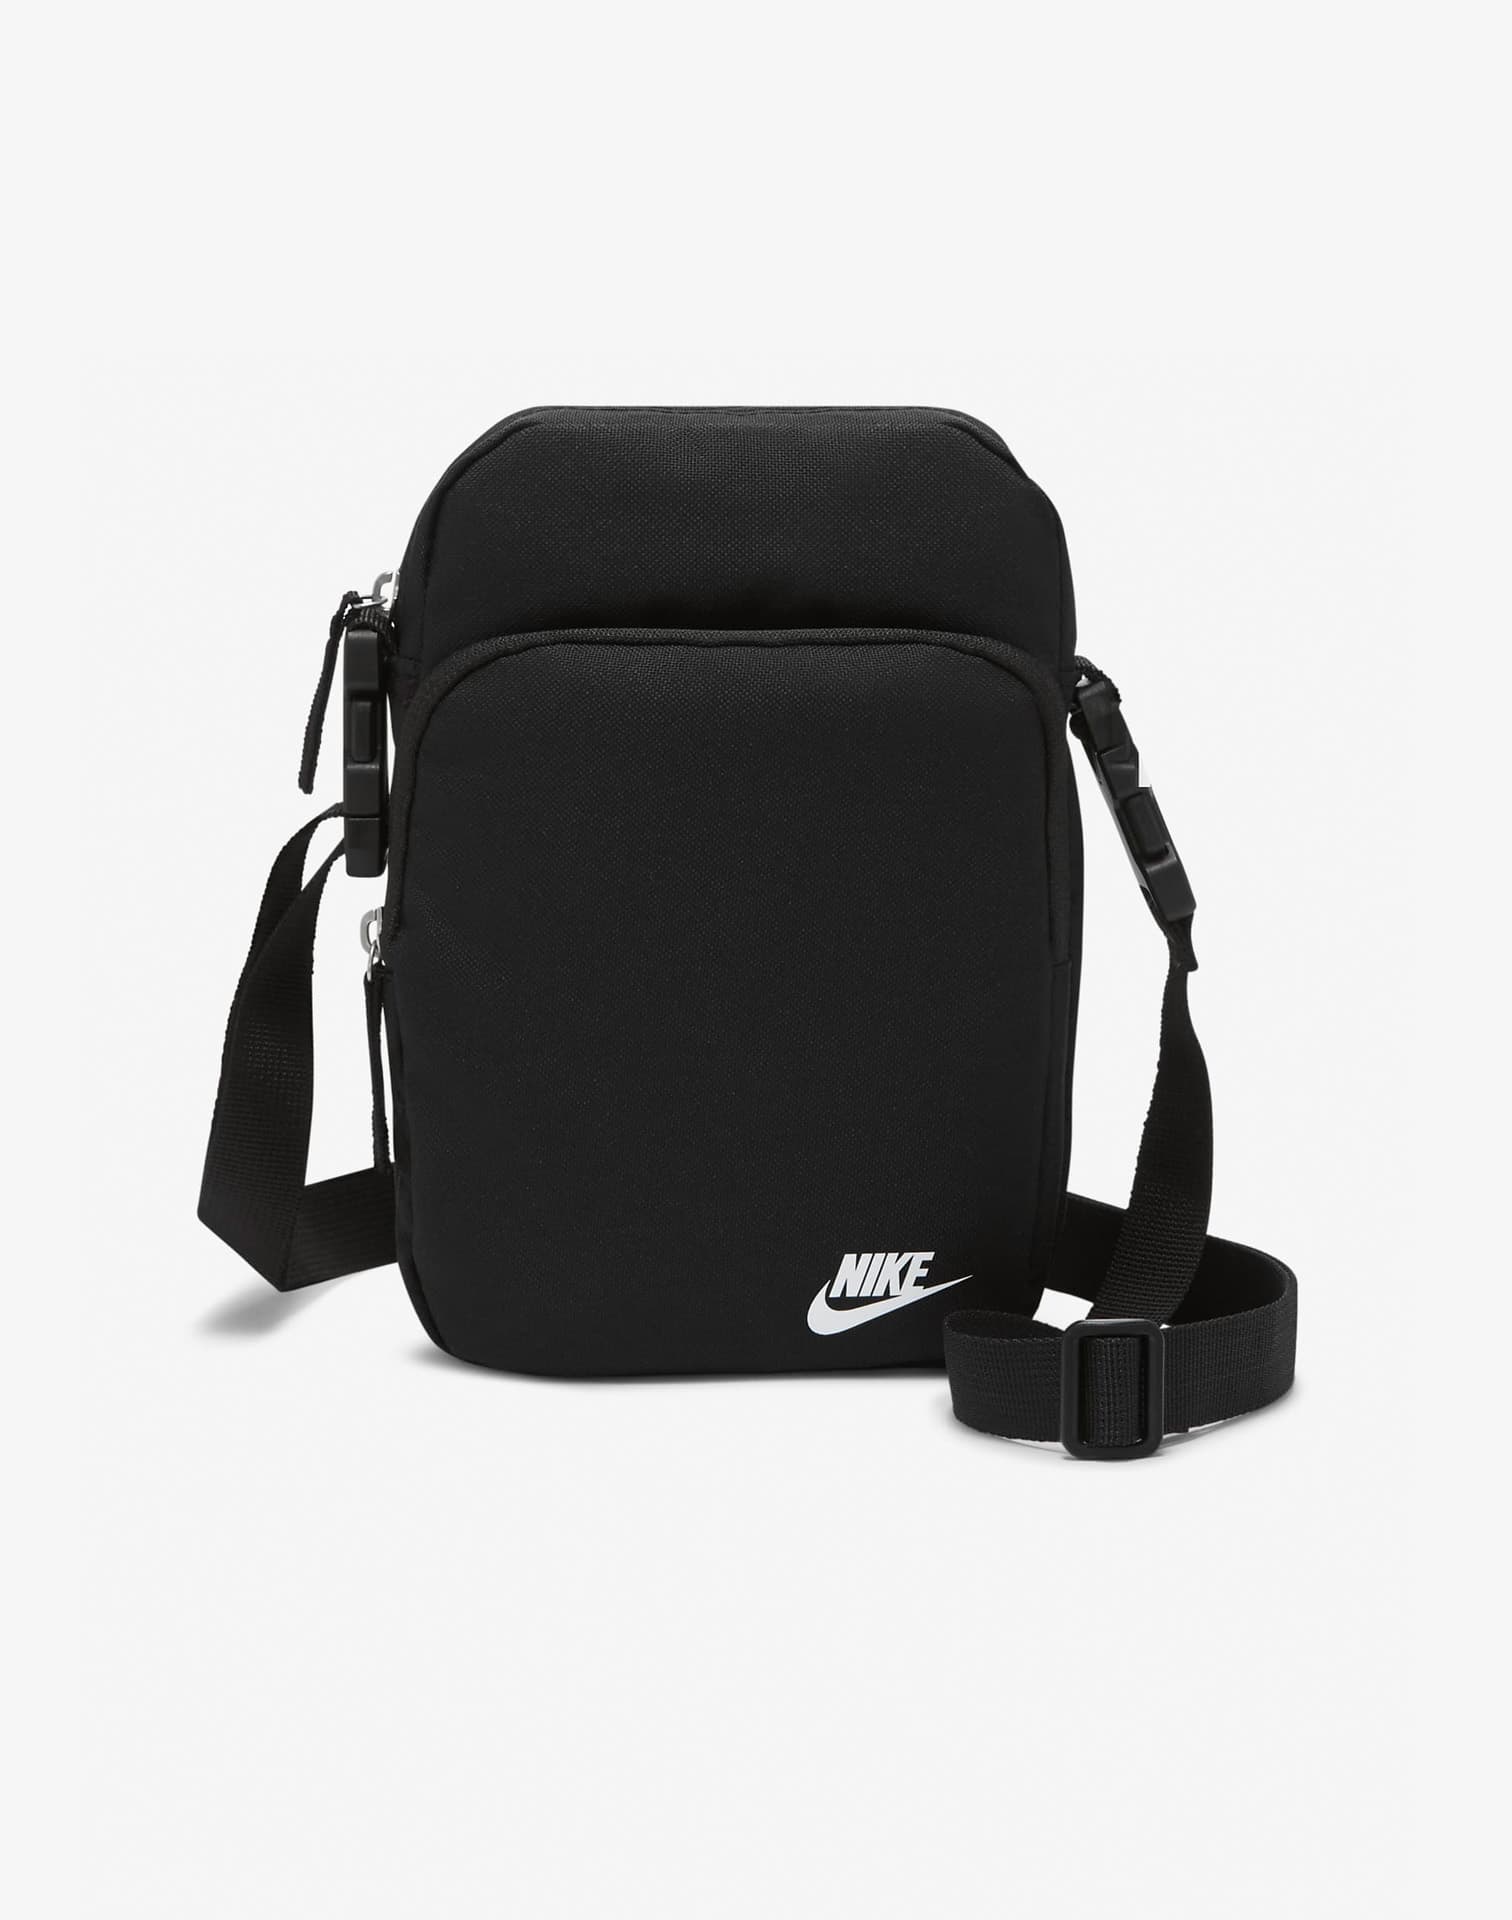 Nike Heritage Crossbody Bag, Plum Eclipse